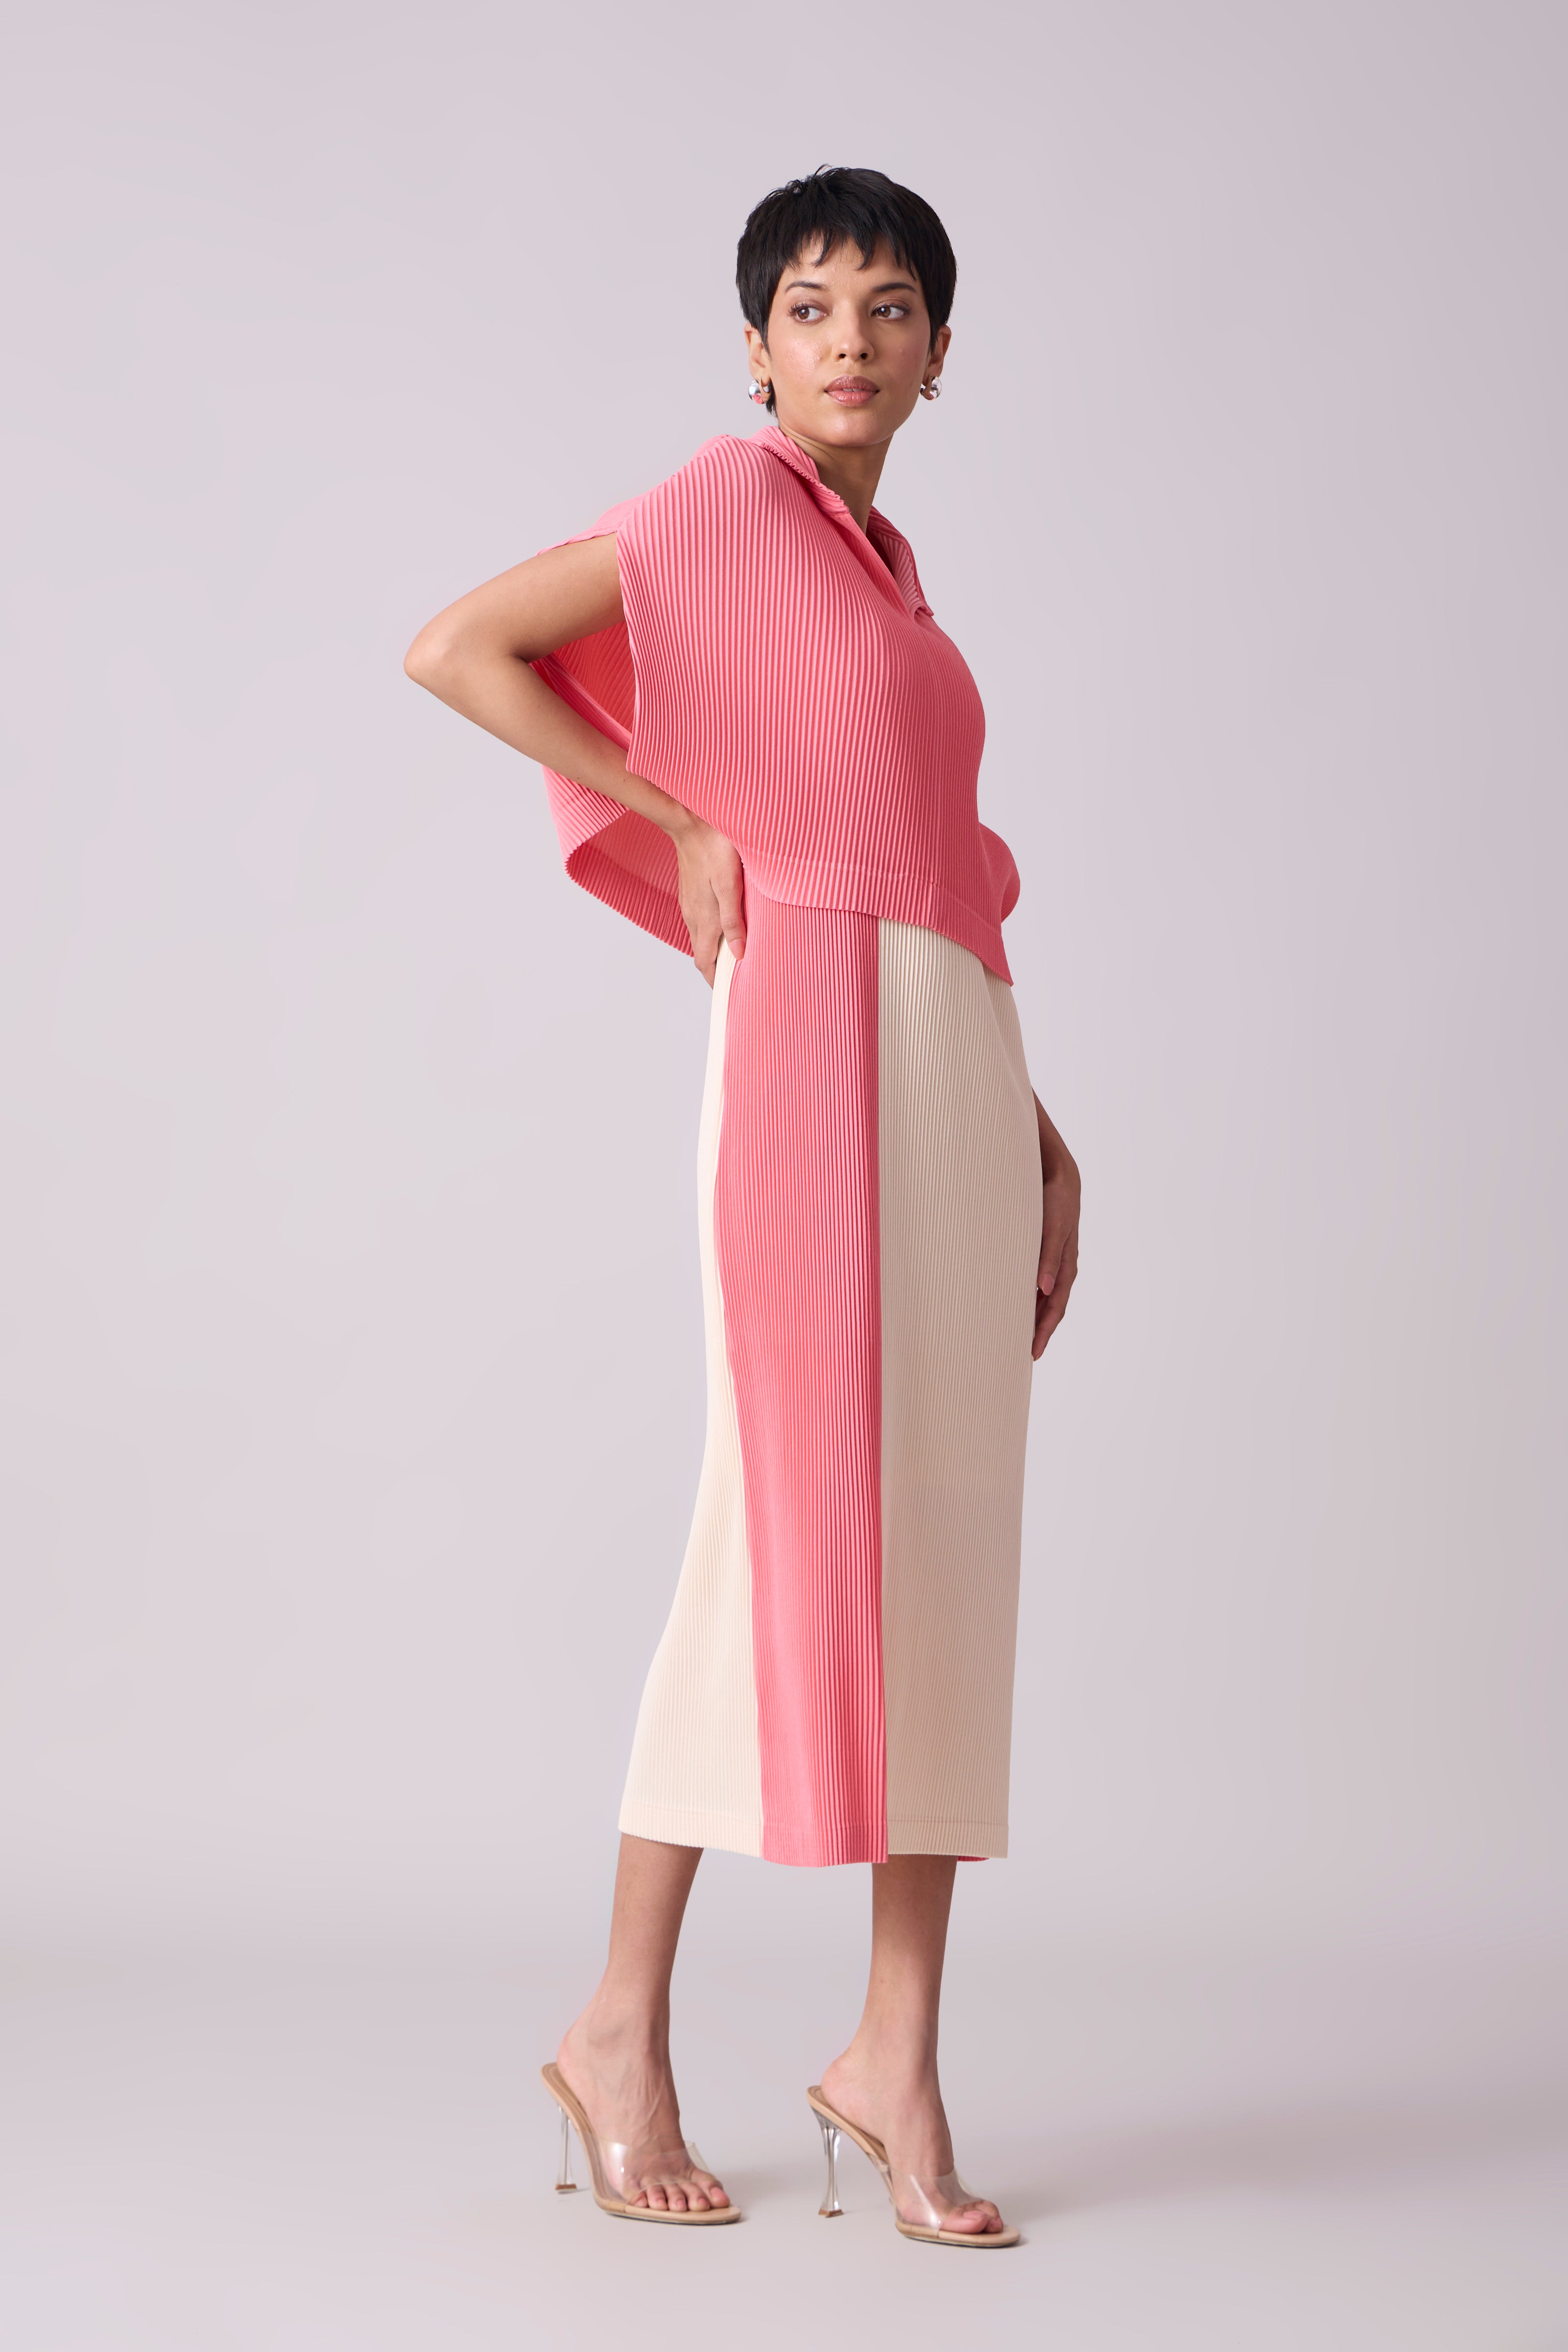 Josie Dual Colour Dress - Pink & Ivory